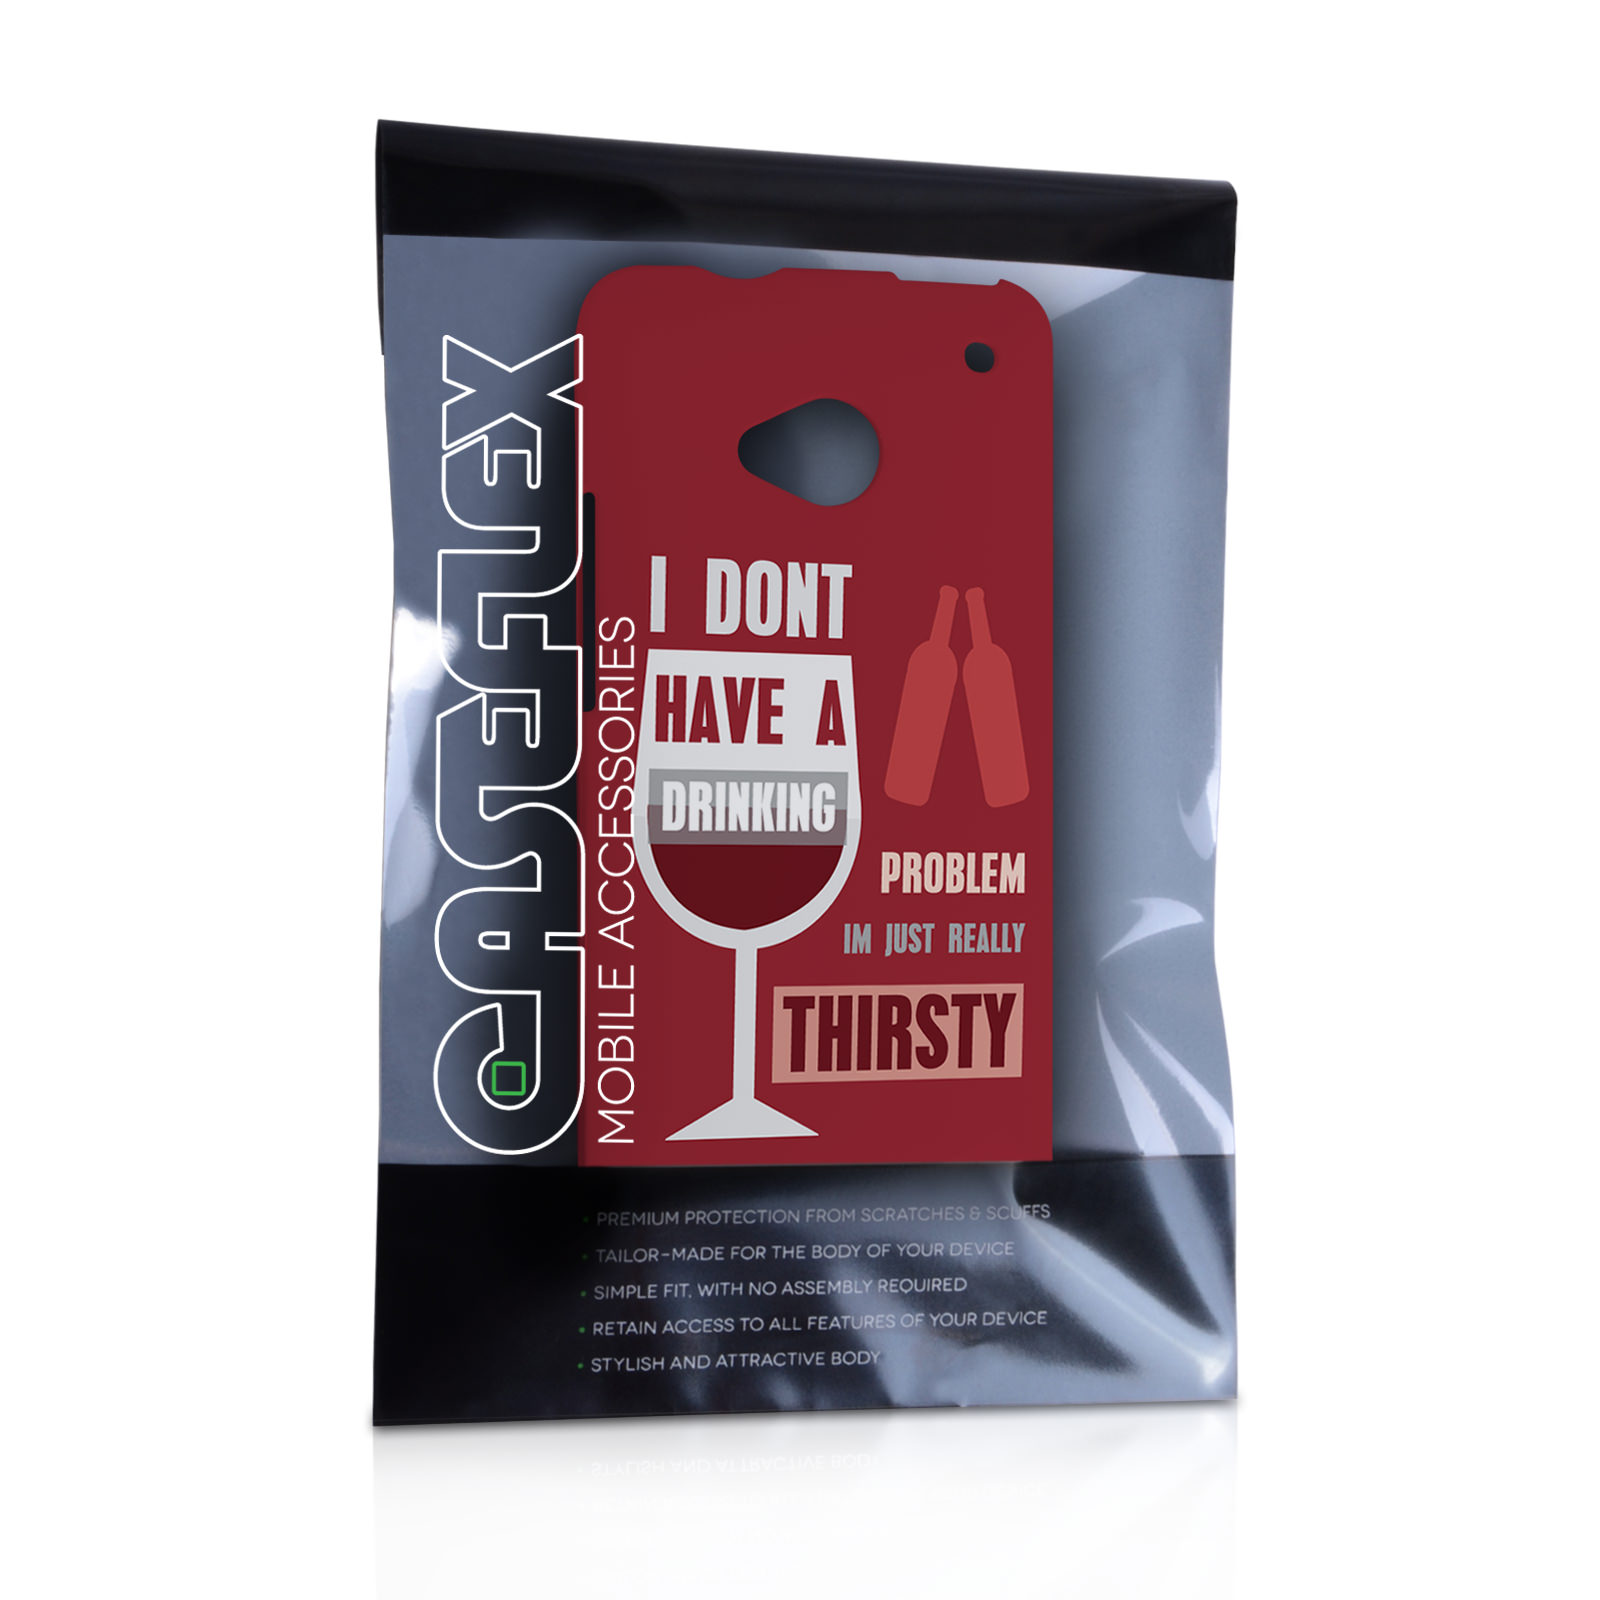 Caseflex HTC One ‘Really Thirsty’ Quote Hard Case – Red